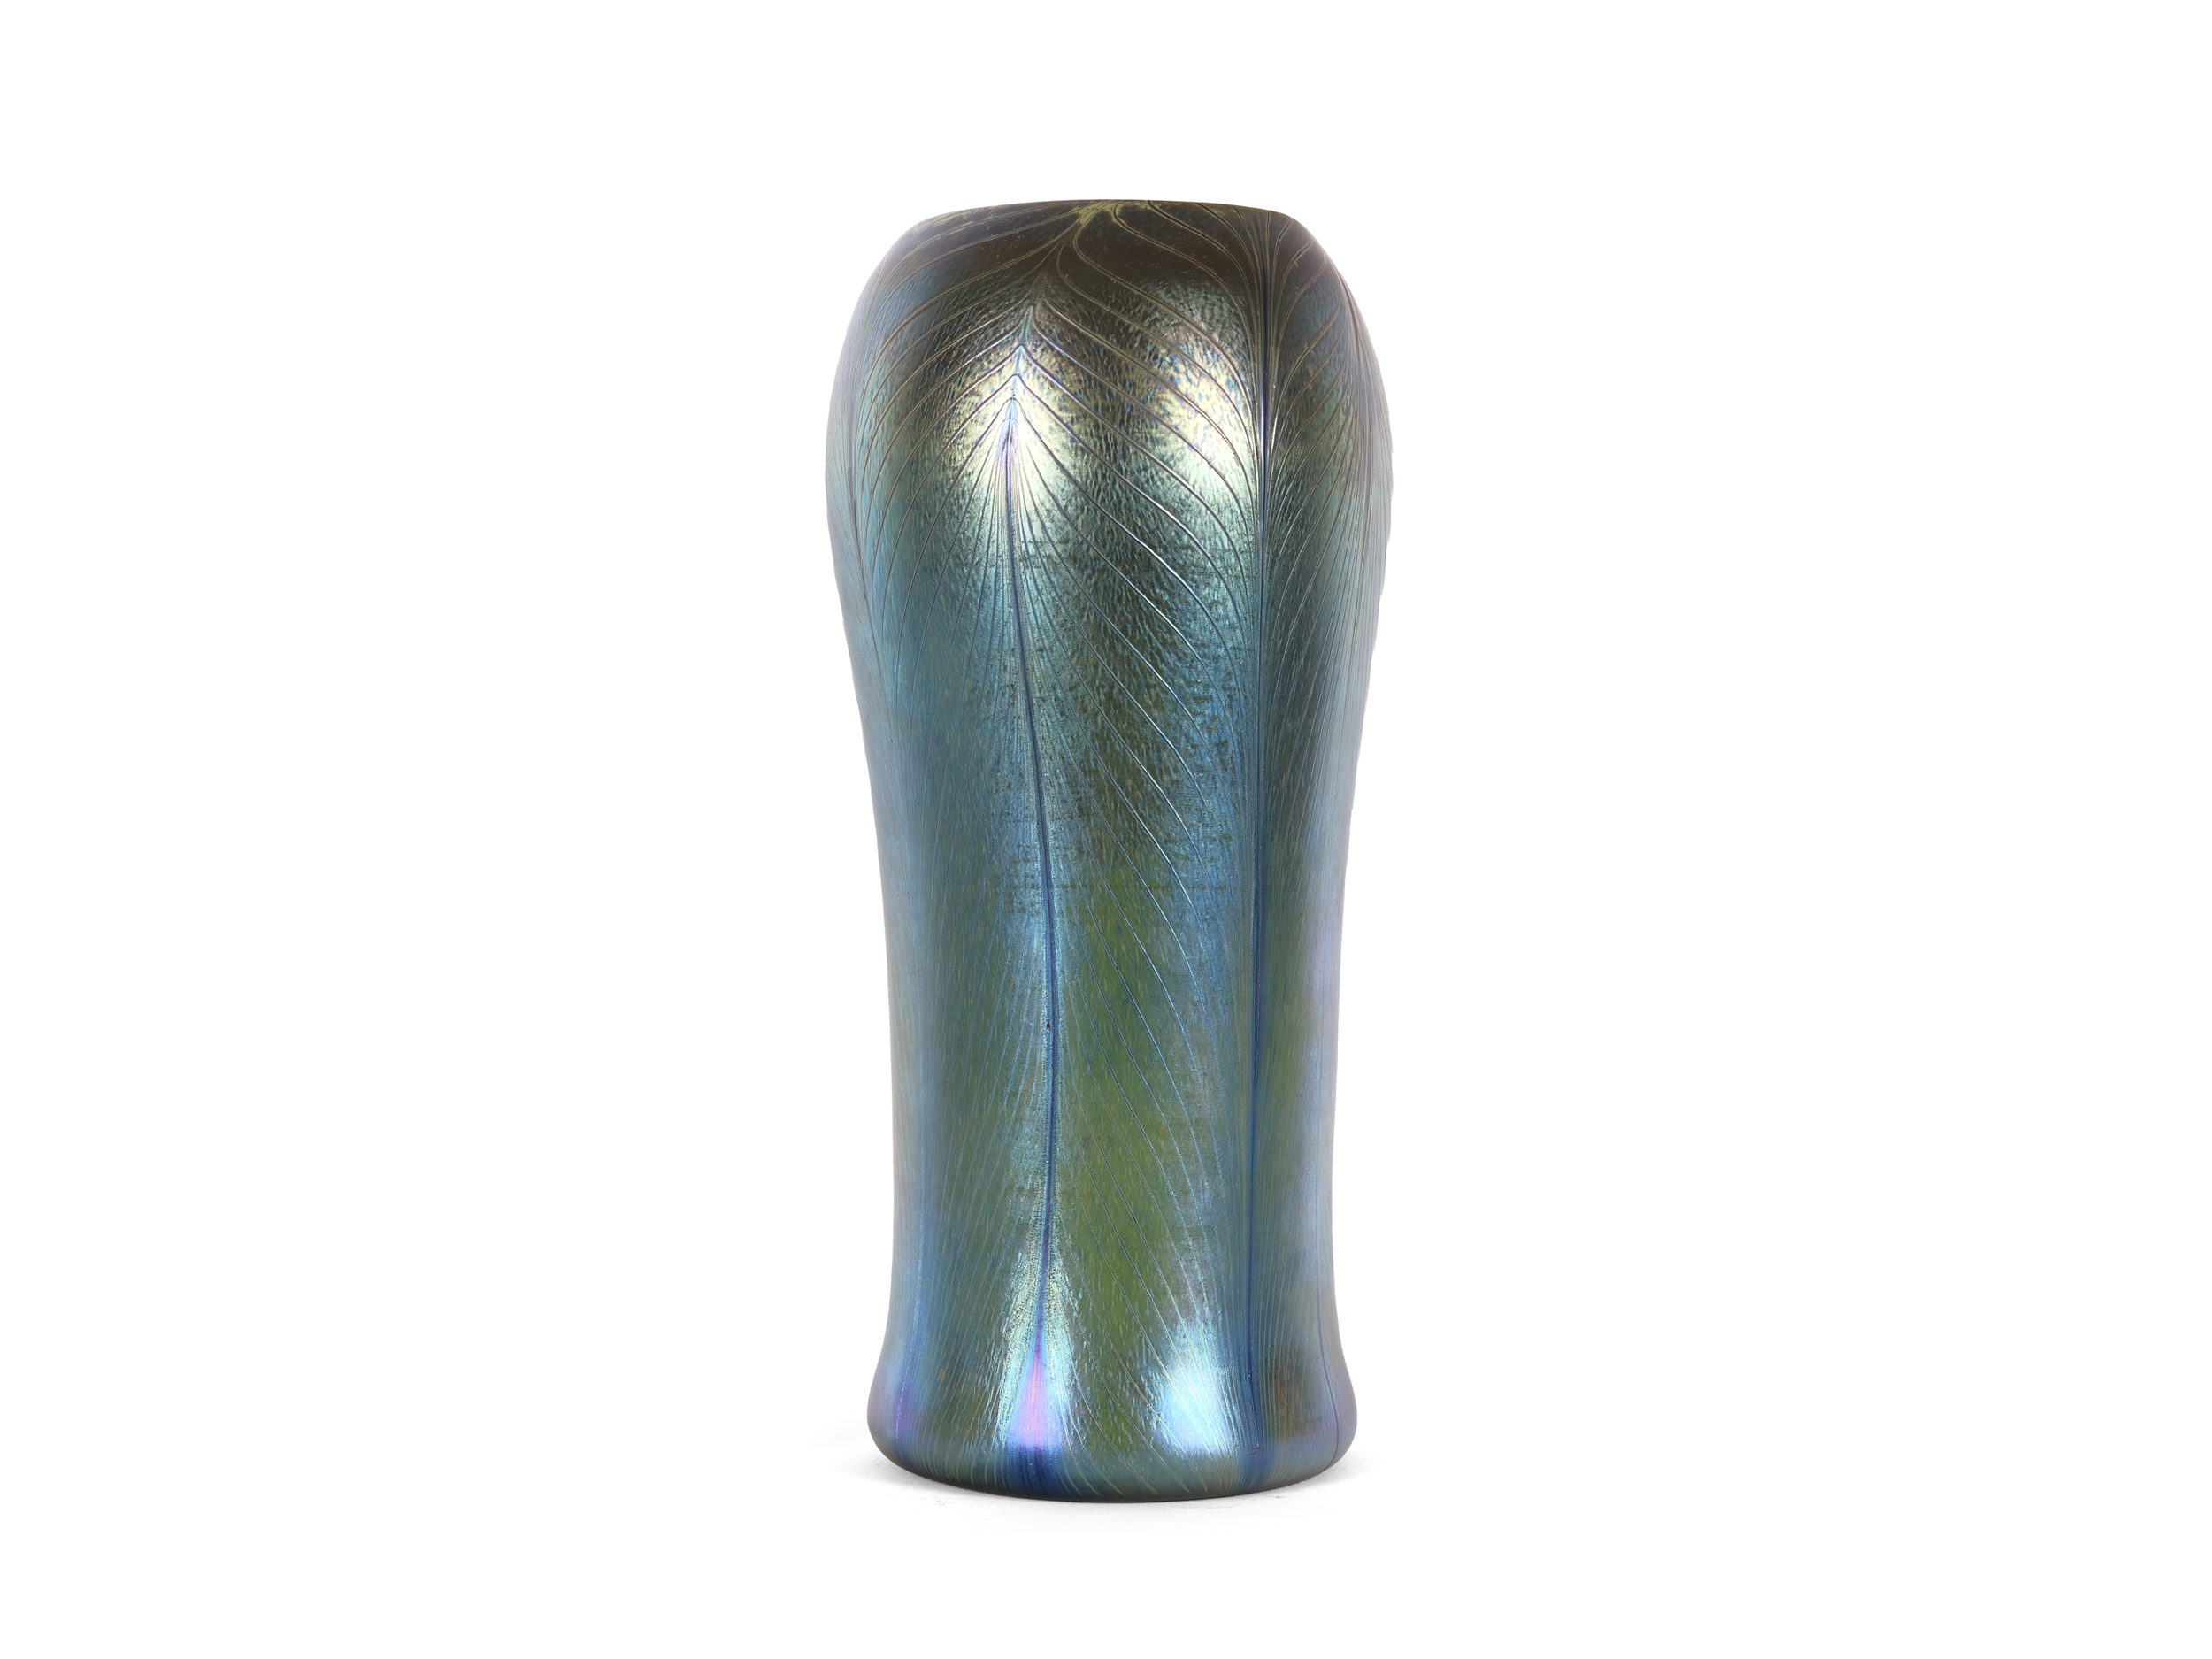 Louis Comfort Tiffany, Peacock Vase - Image 2 of 6